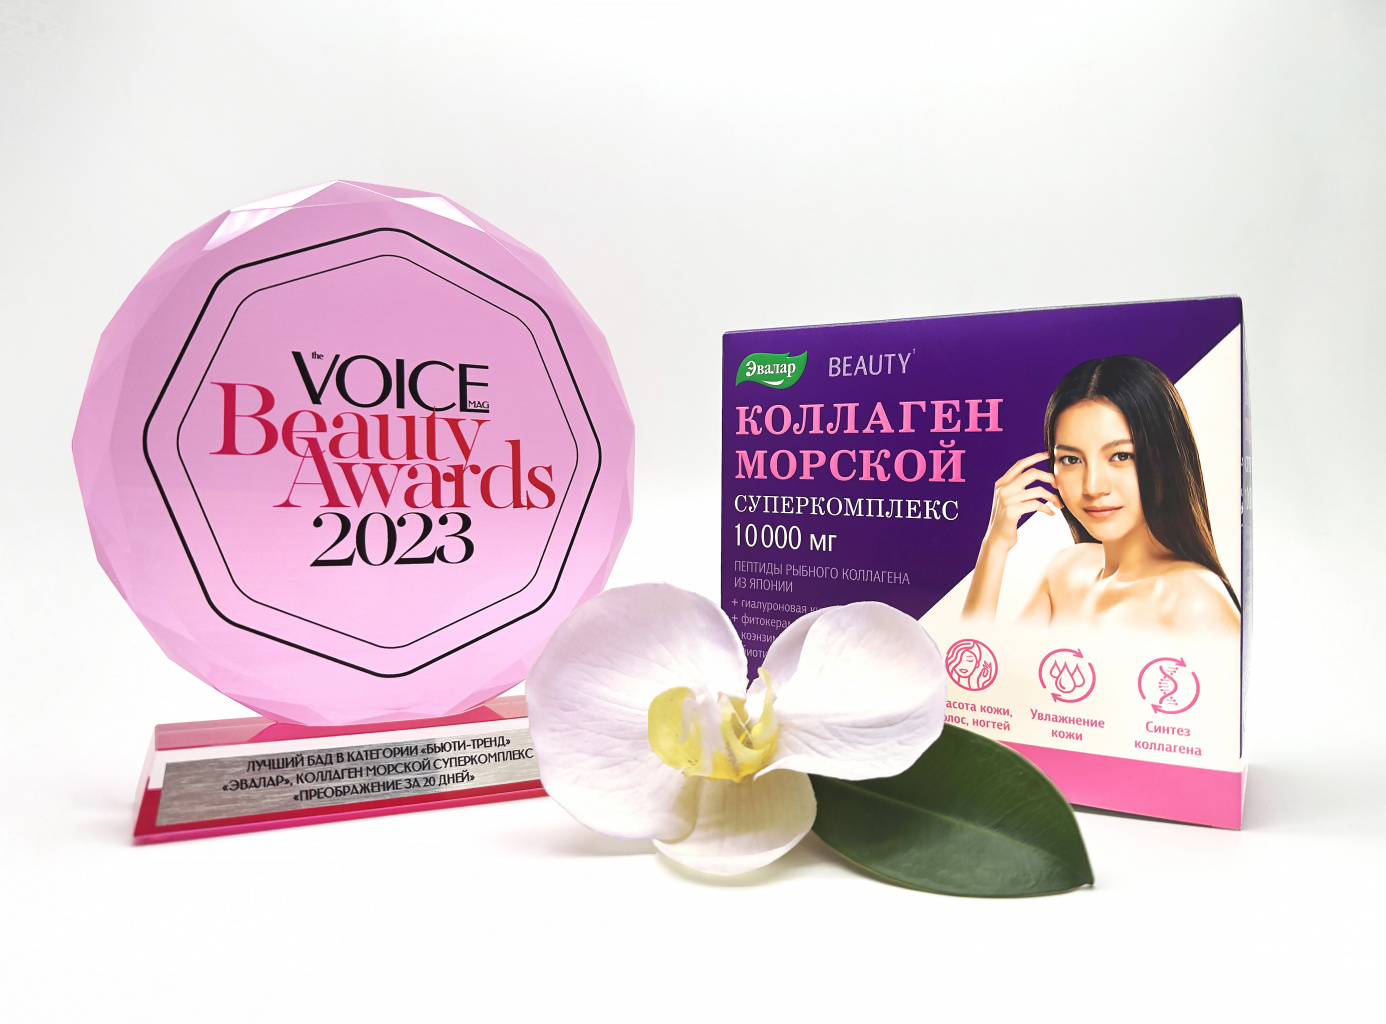 The Winner of the Voice Beauty Awards 2023 Sea Collagen Supercomplex.jpg